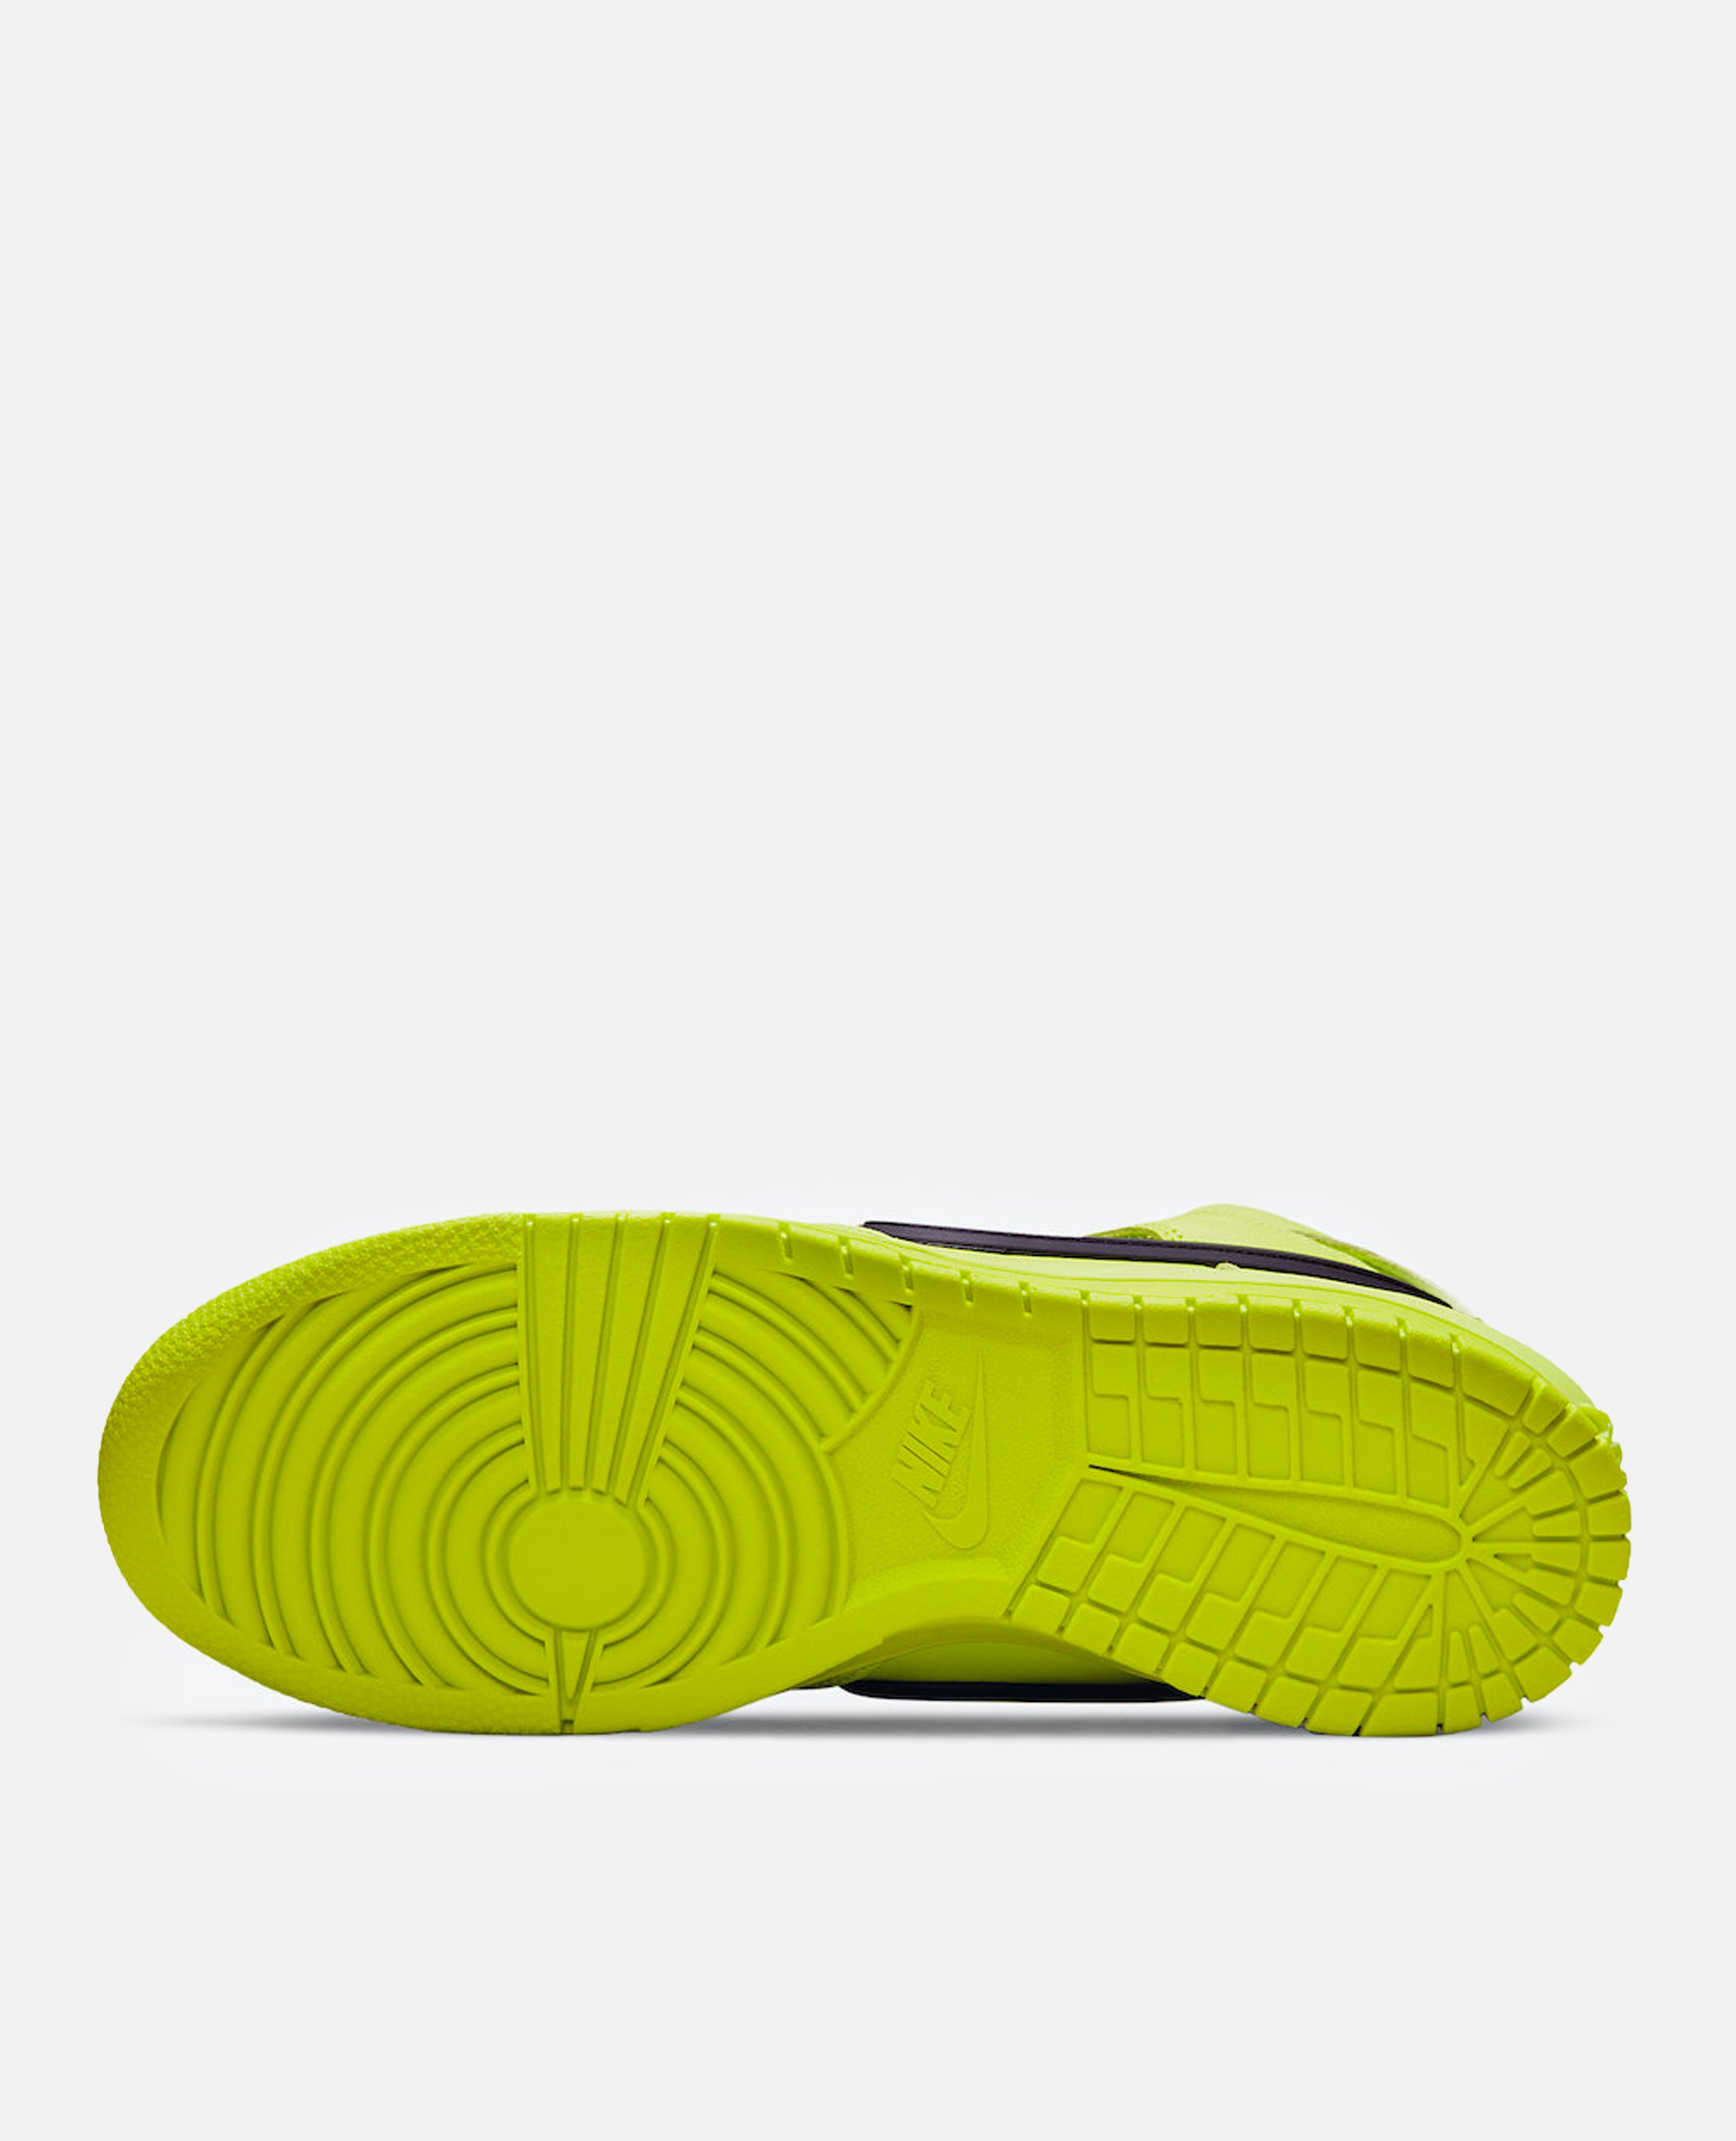 Nike x Ambush Dunk High (Atomic Green/Black-Flash Lime) – Patta